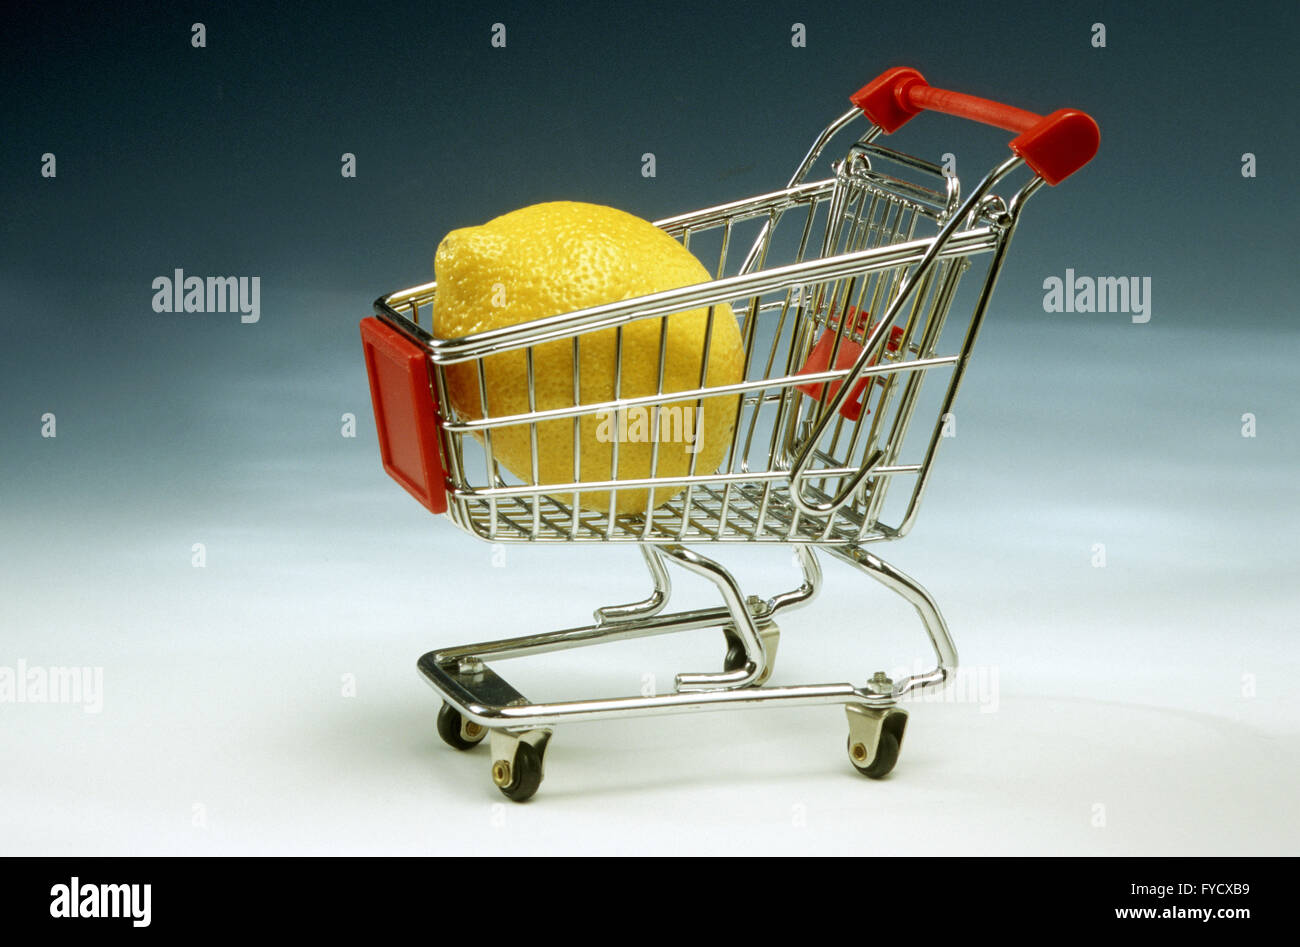 Lemon in a shopping cart Stock Photo